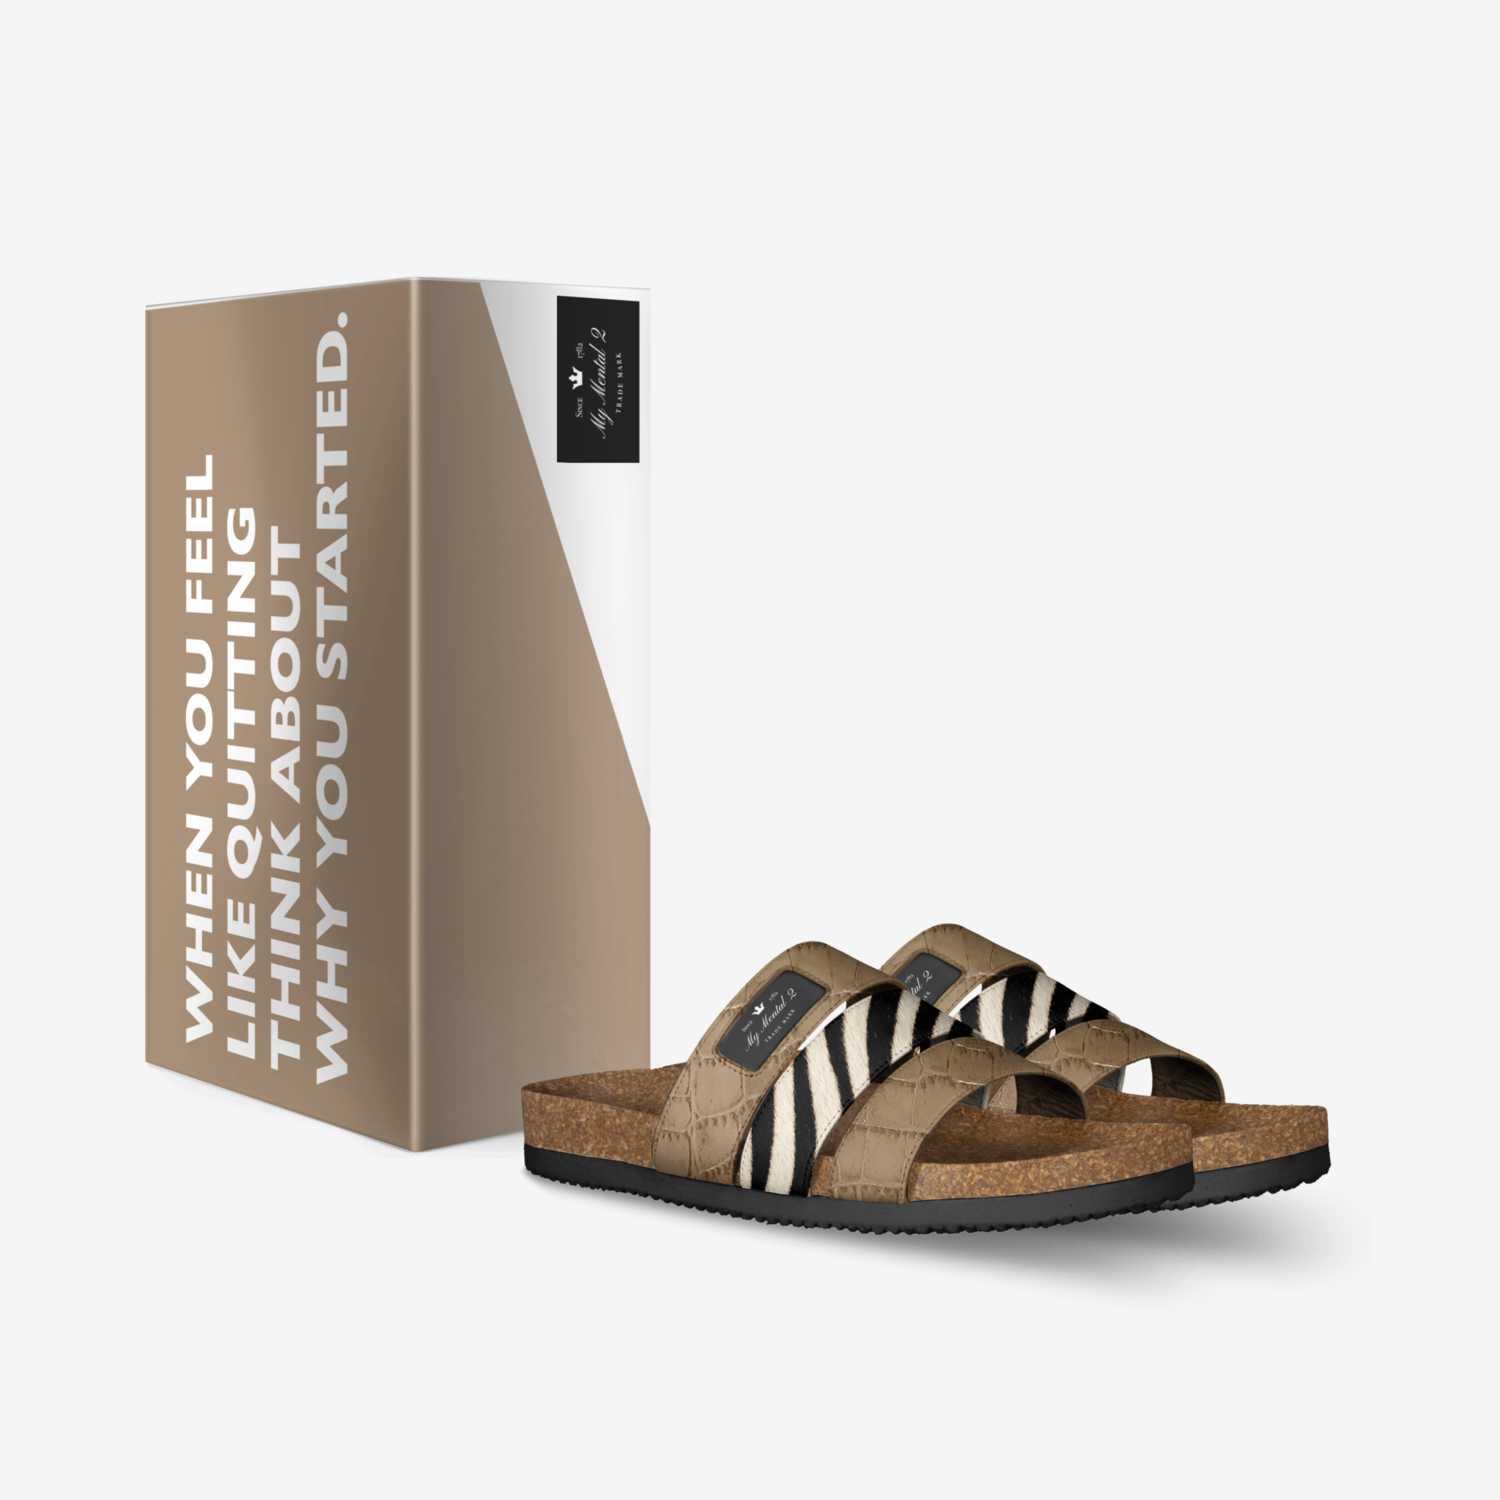 My Mental 2 custom made in Italy shoes by Natasha M Jones | Box view